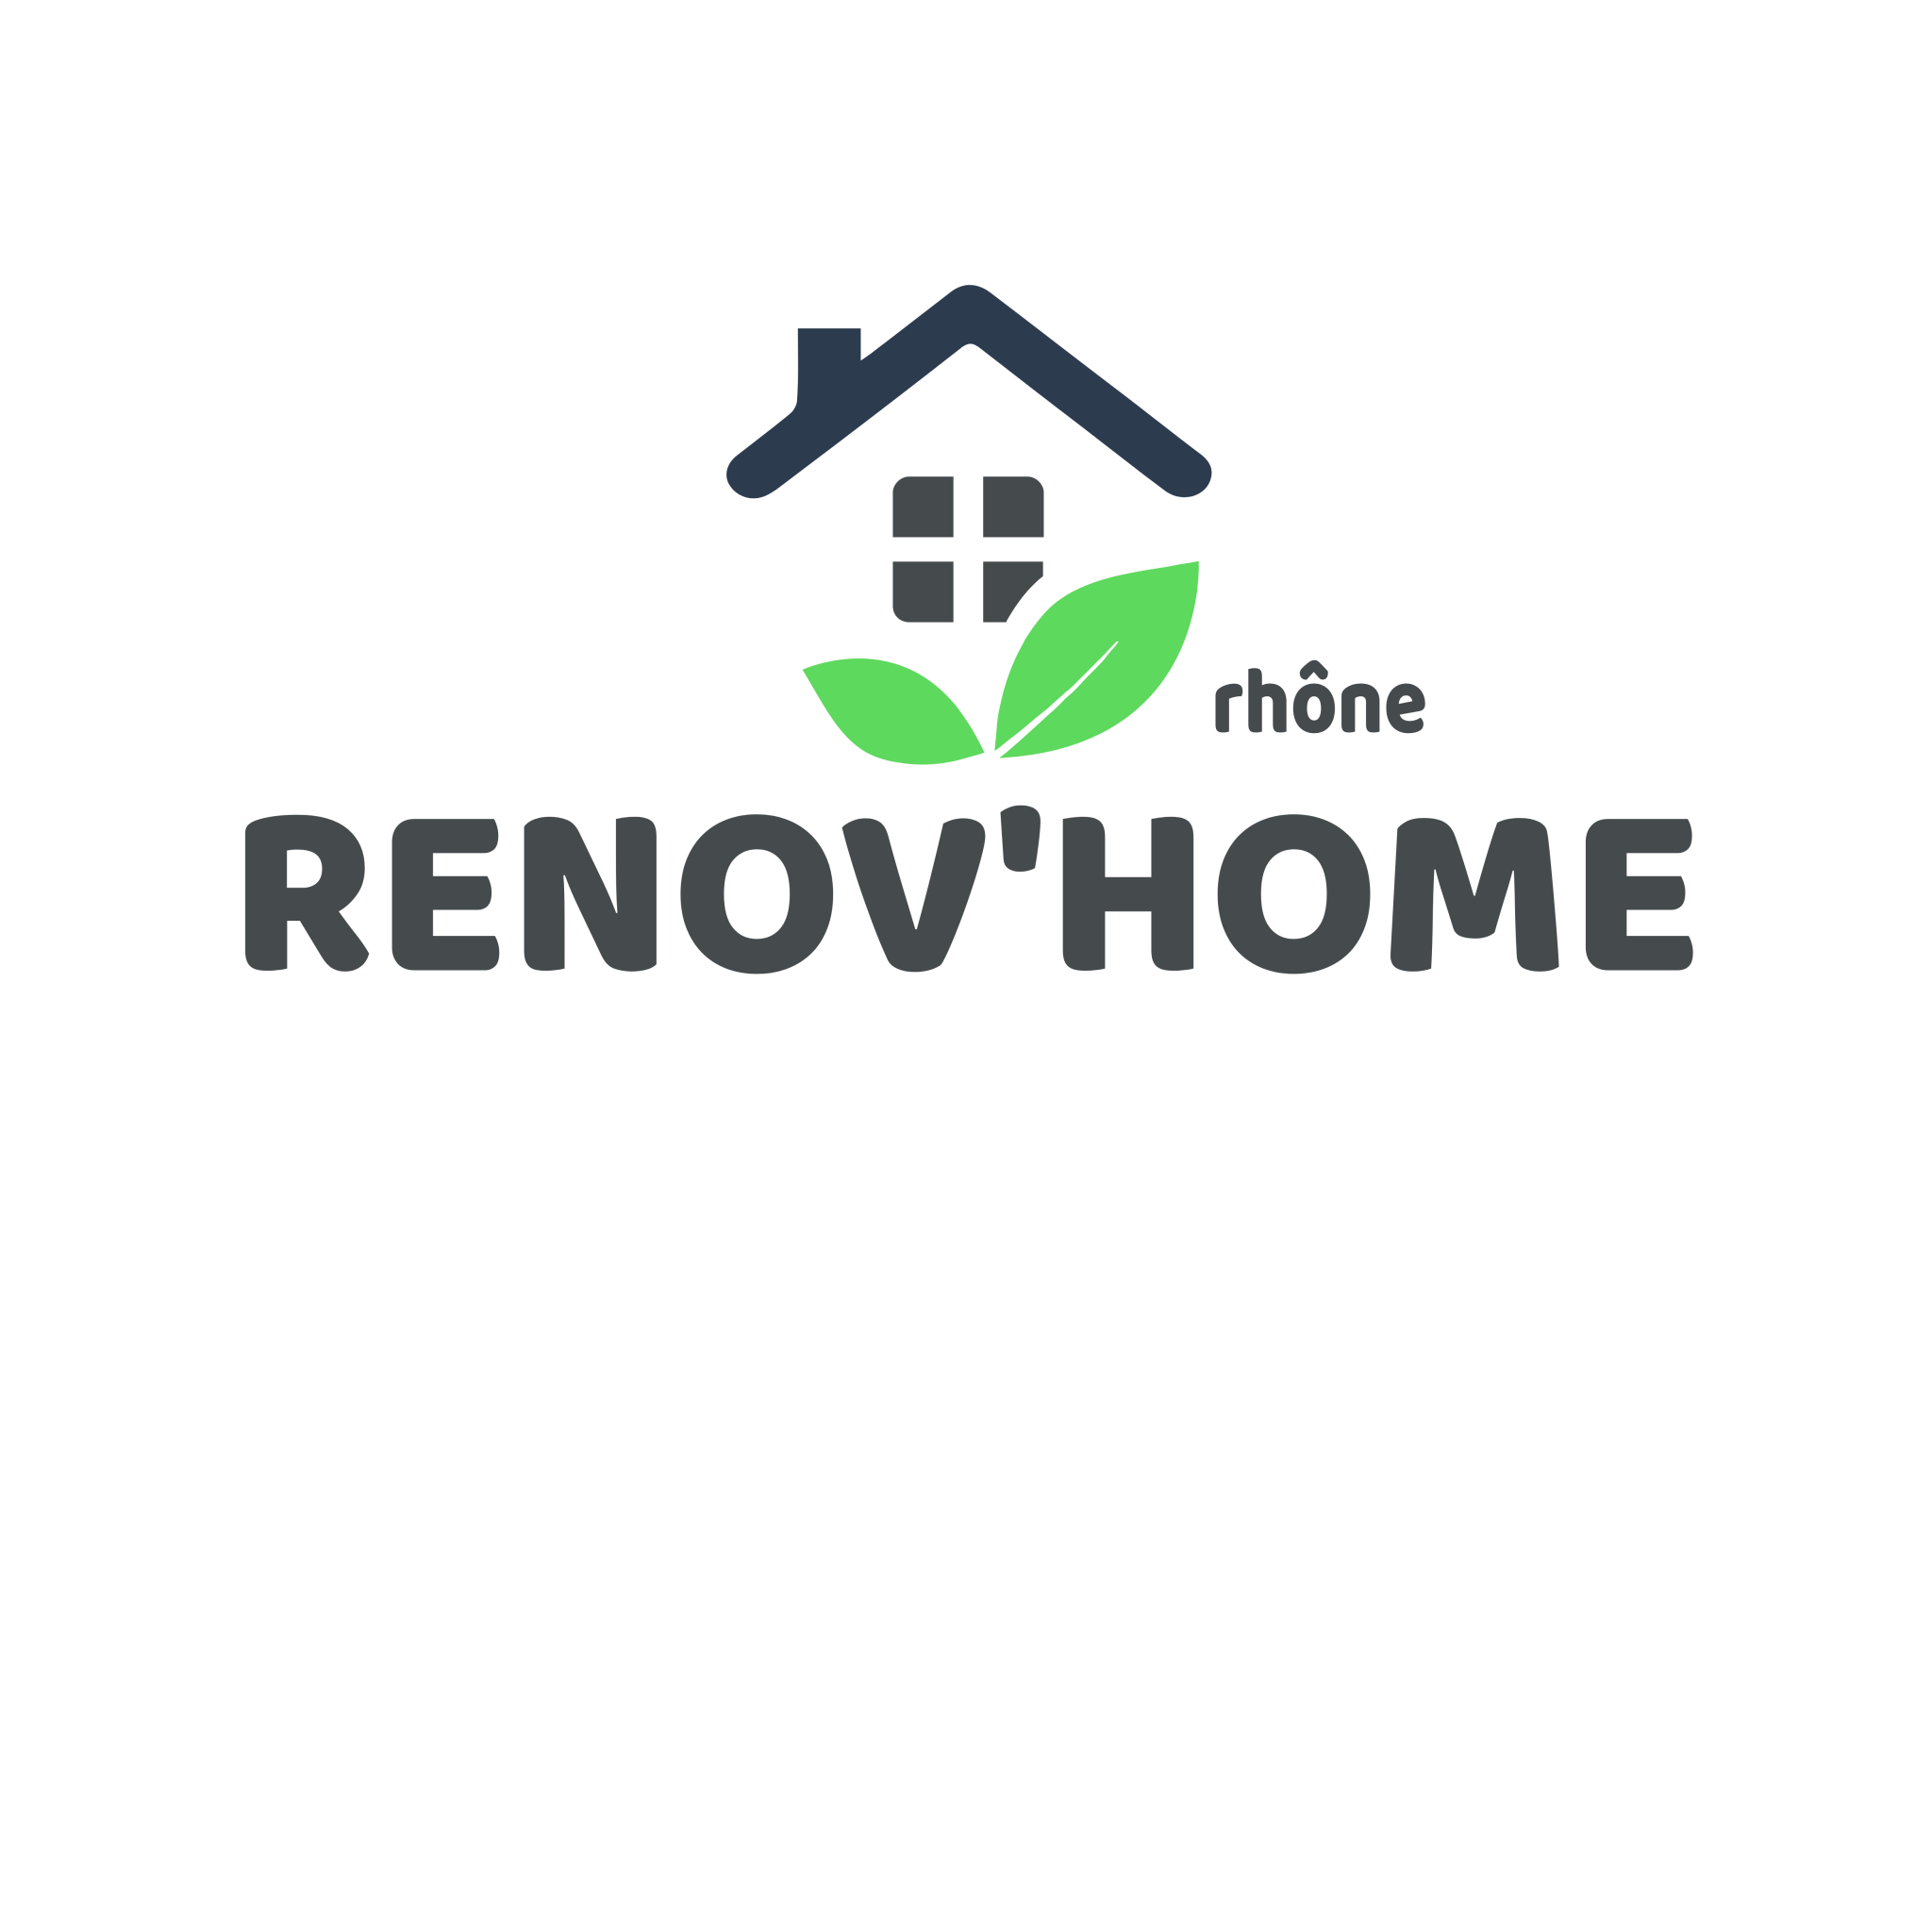 Logo de Renov'home Rhone, société de travaux en Porte de garage